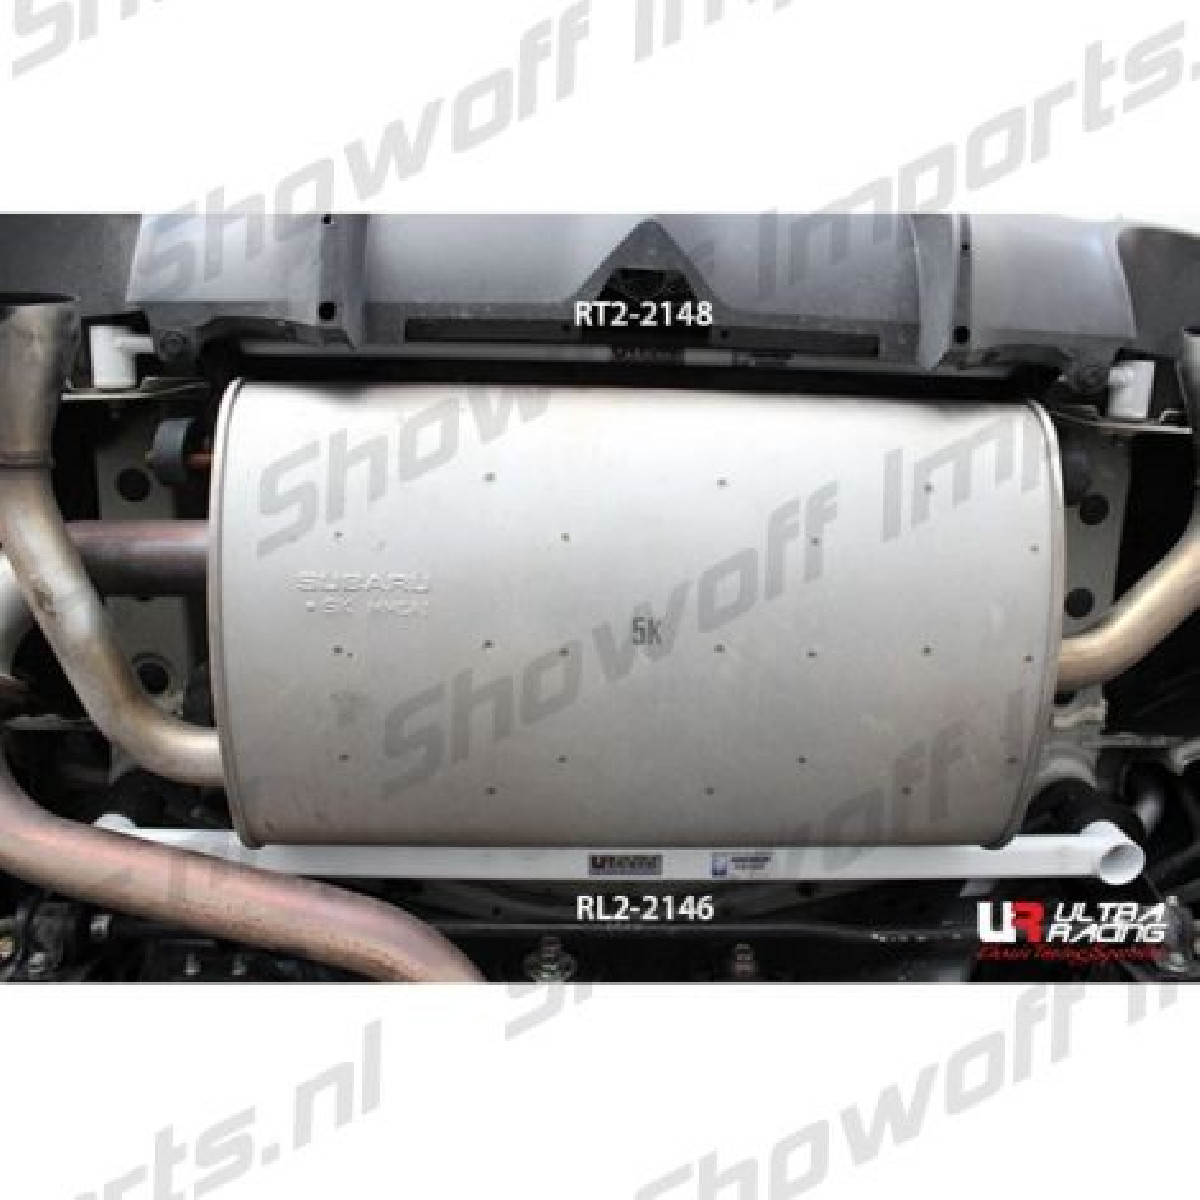 Subaru BRZ  Ultra-R 2P Rear Torsion Bar 2148